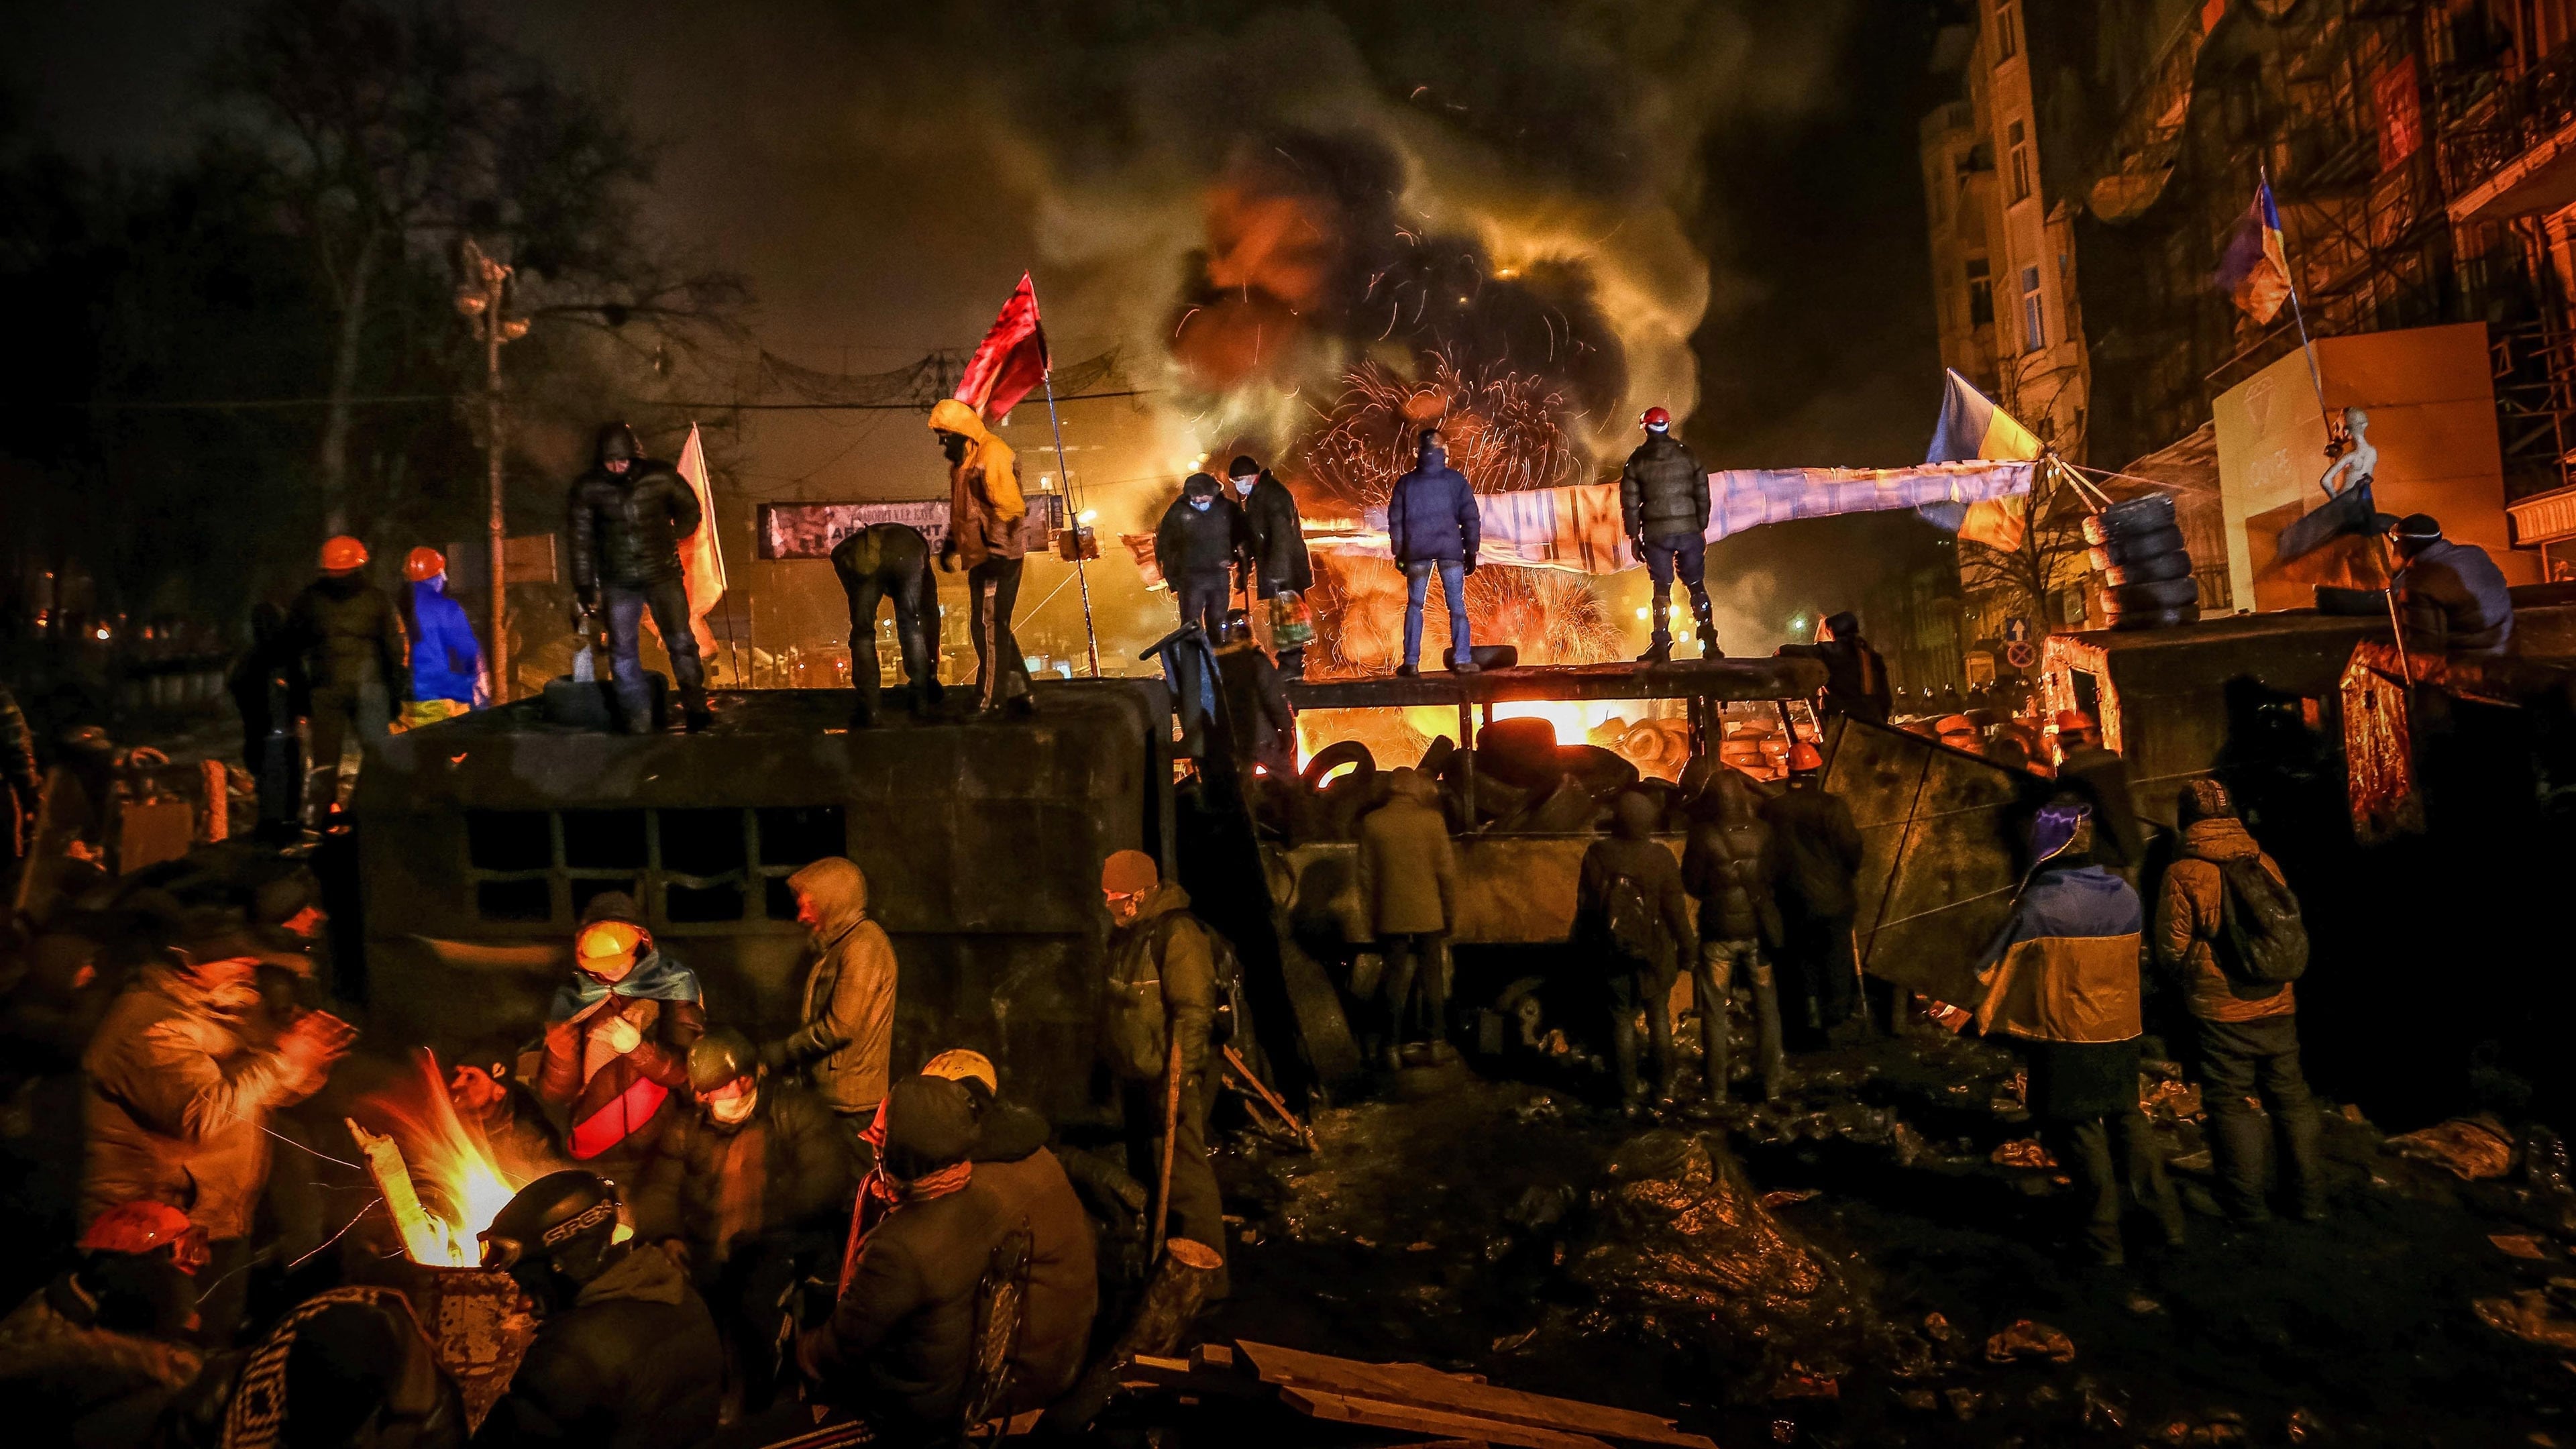 Xem Phim Mùa Đông Rực Lửa (Winter on Fire: Ukraine's Fight for Freedom)